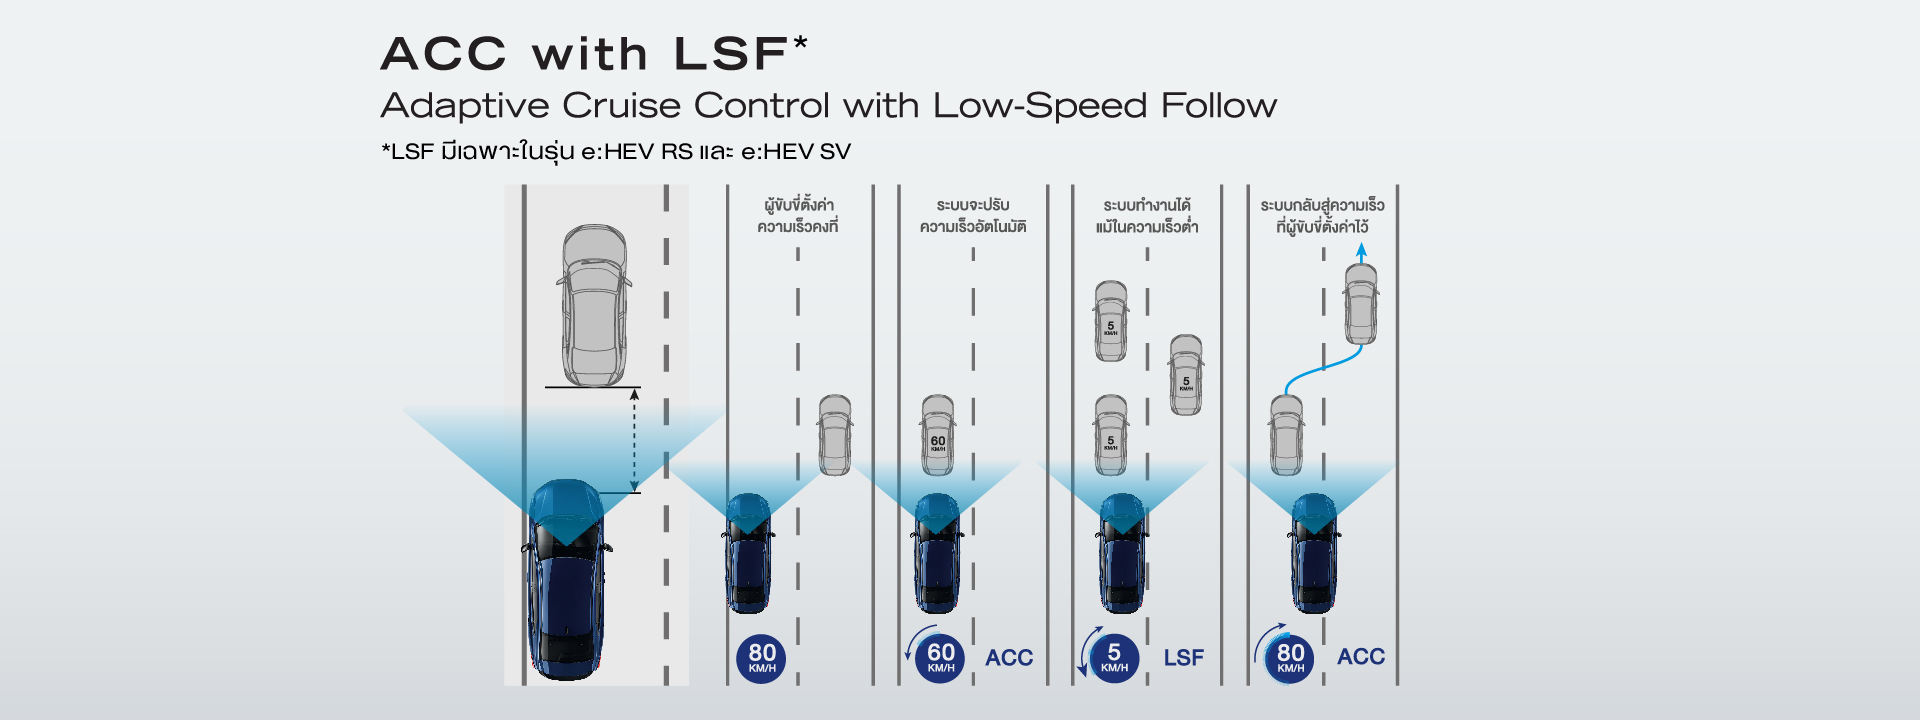 Adaptive Cruise Control with Low-Speed Follow (ACC with LSF) ระบบควบคุมความเร็วอัตโนมัติแบบแปรผันพร้อม ระบบปรับความเร็วตามรถยนต์คันหน้าที่ความเร็วต่ำ